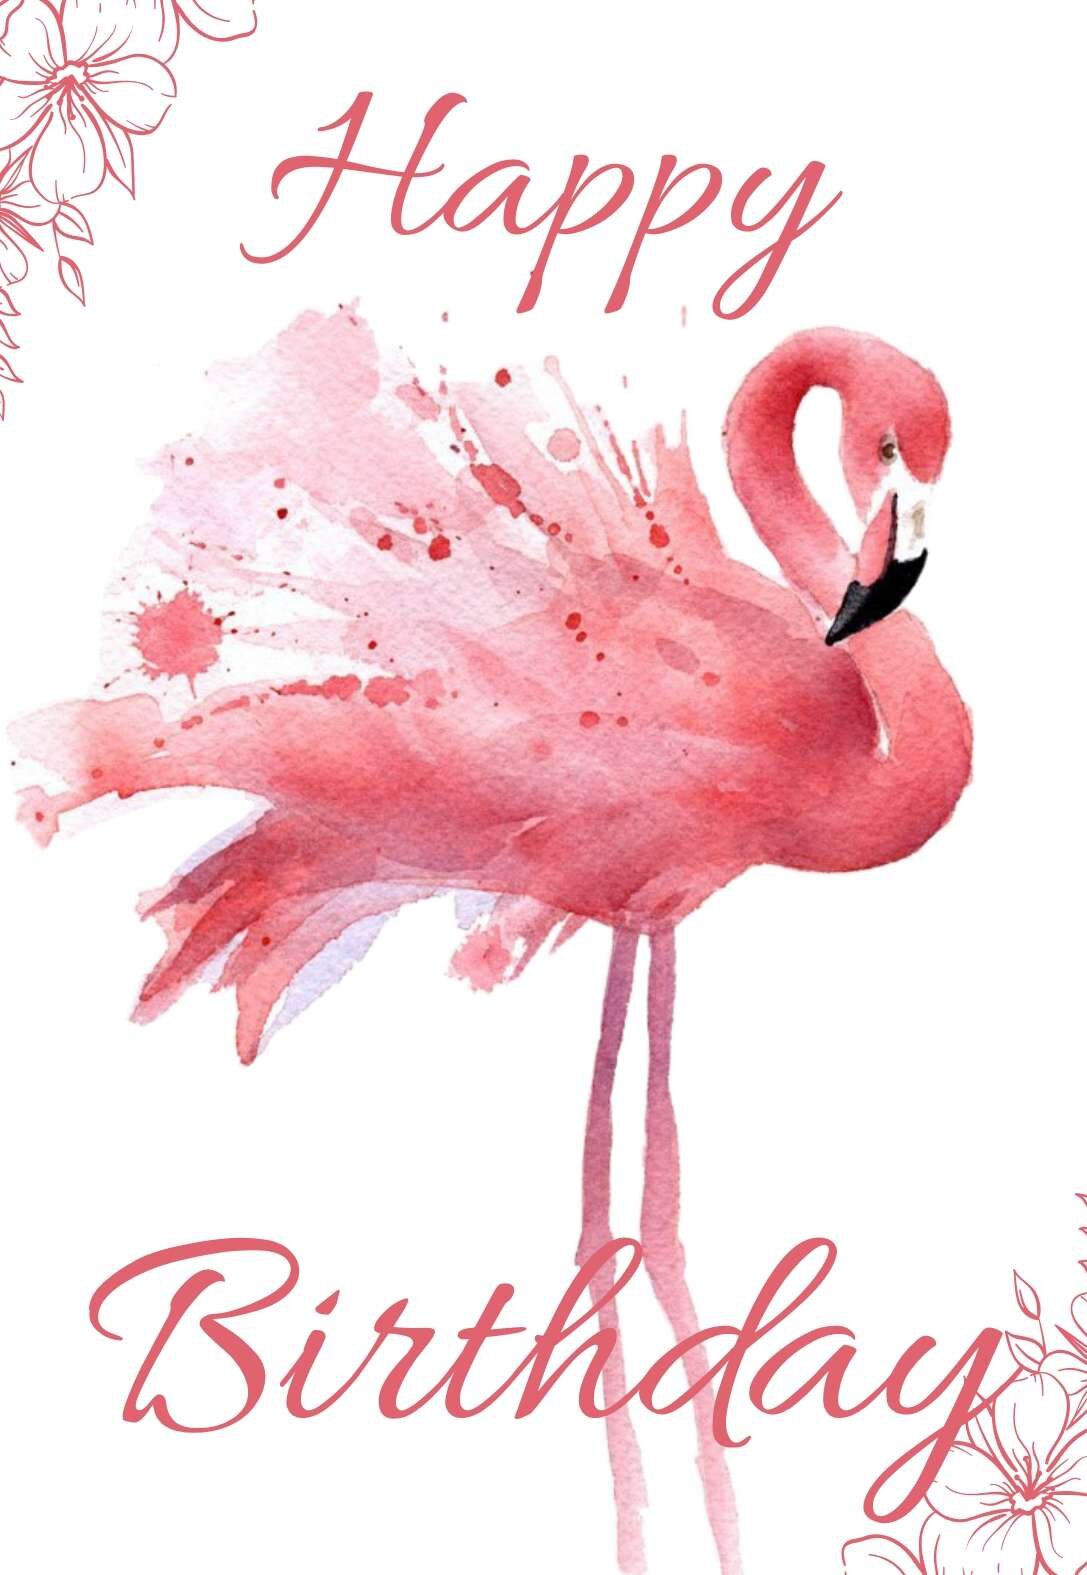 Free Printable Flamingo Birthday Cards